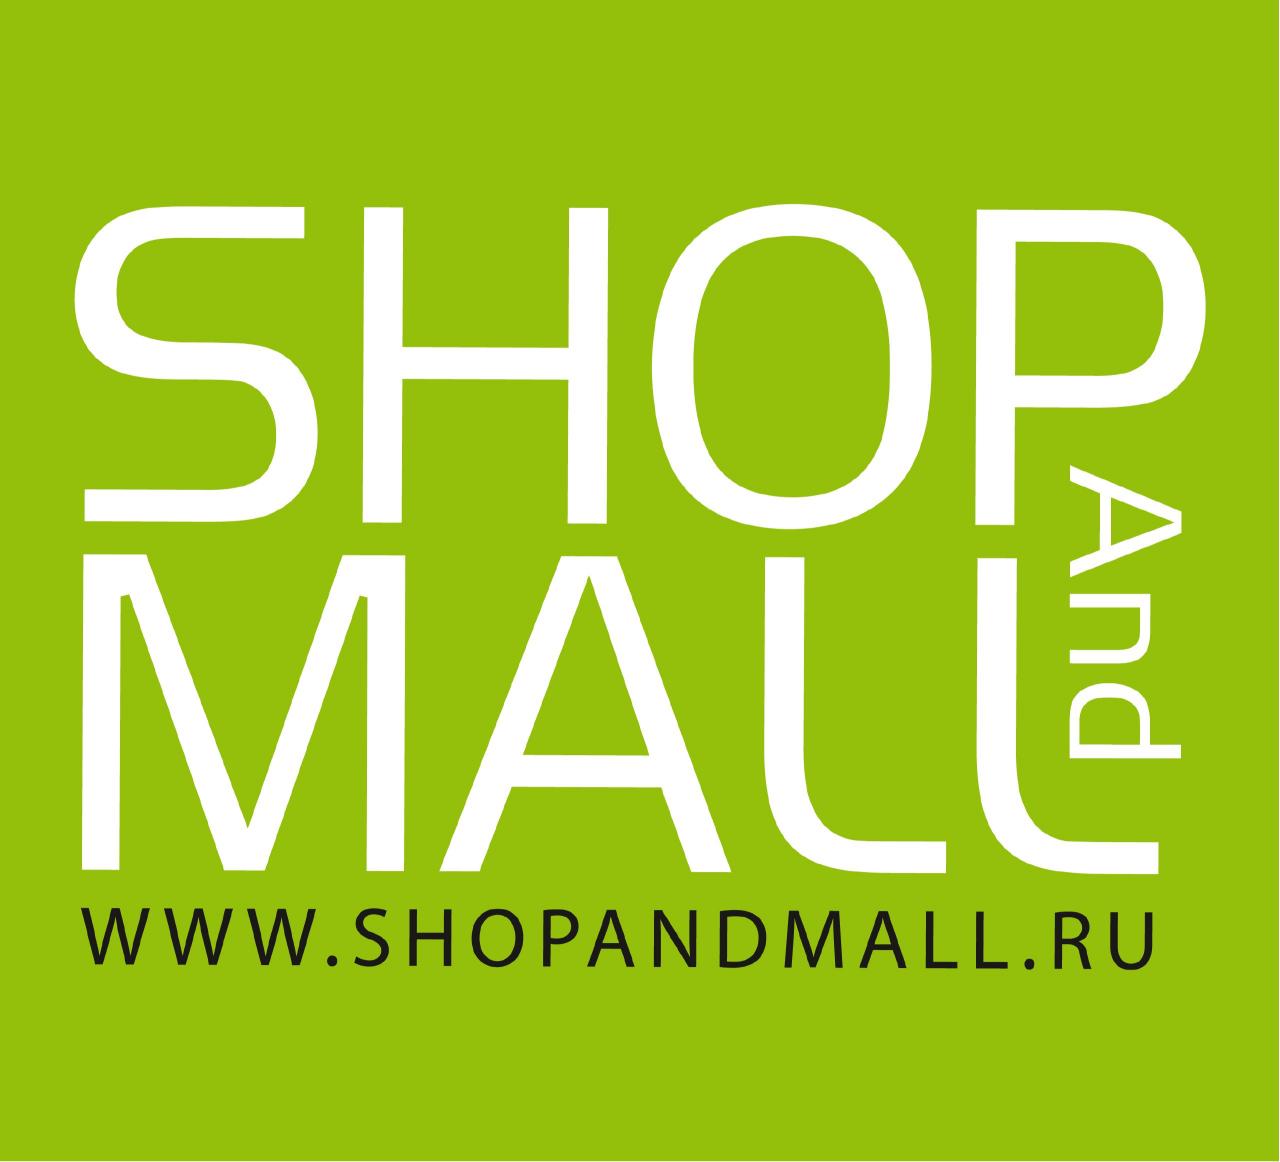 (c) Shopandmall.ru